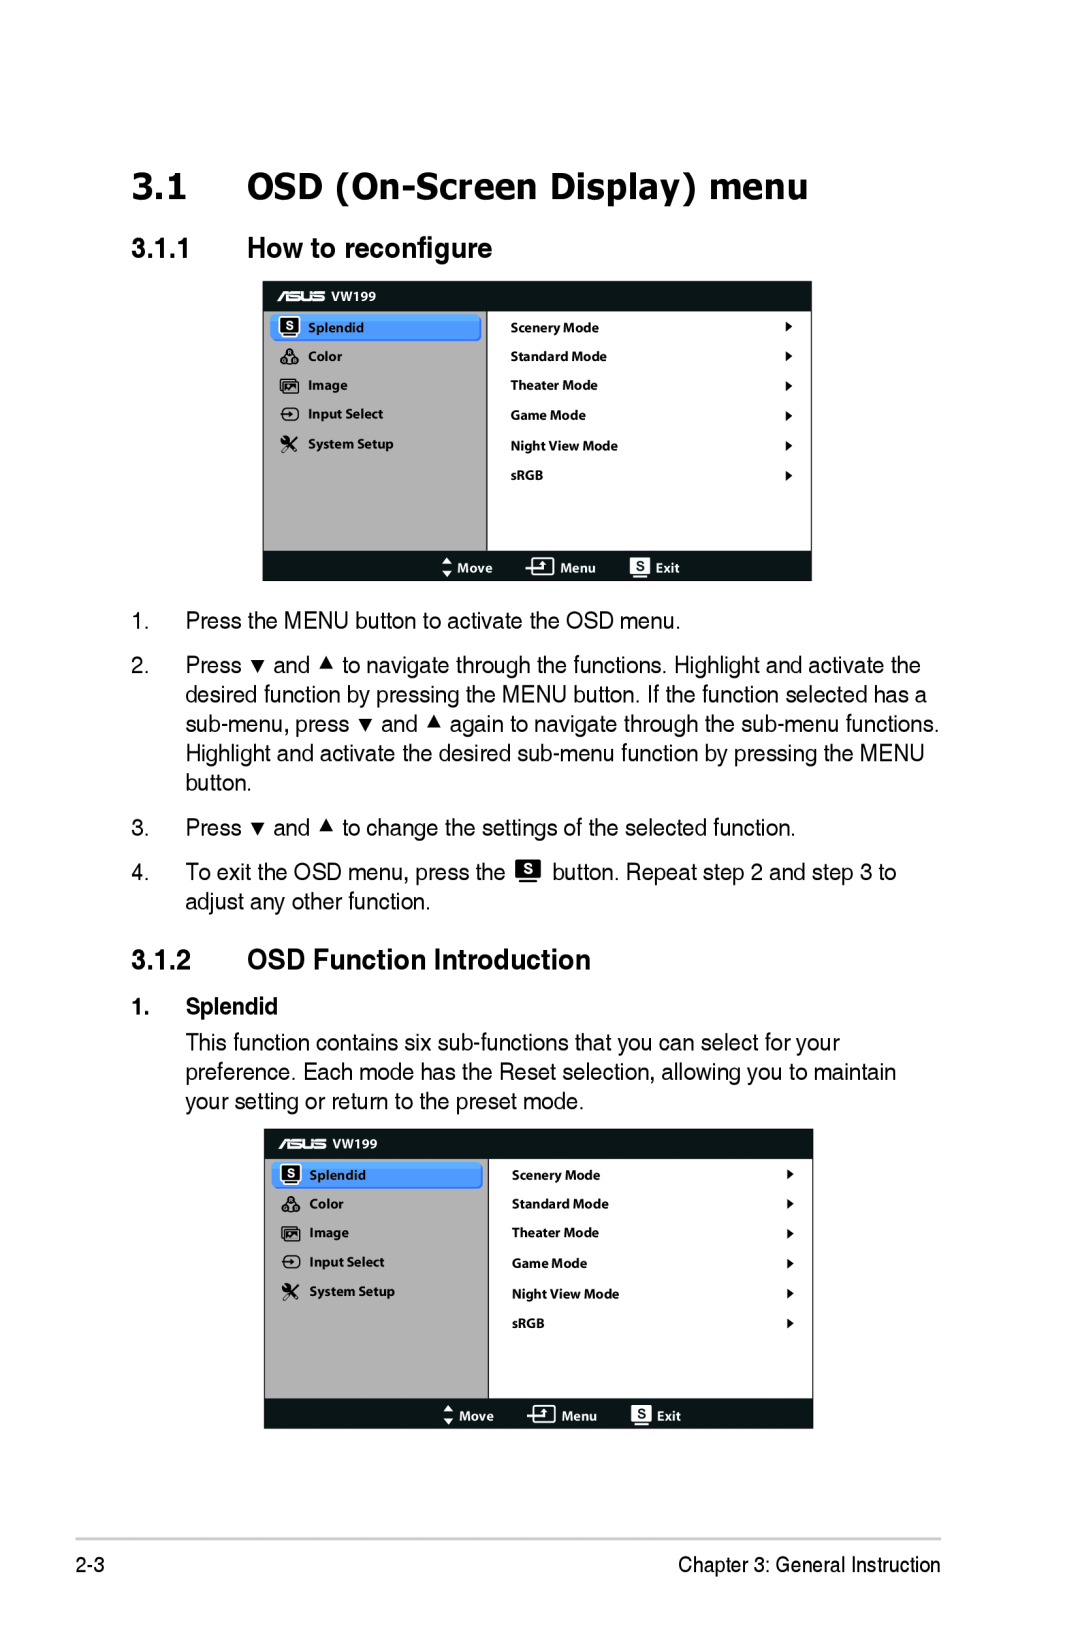 Sears VW199 manual OSD On-Screen Display menu, How to reconfigure, OSD Function Introduction, Splendid 